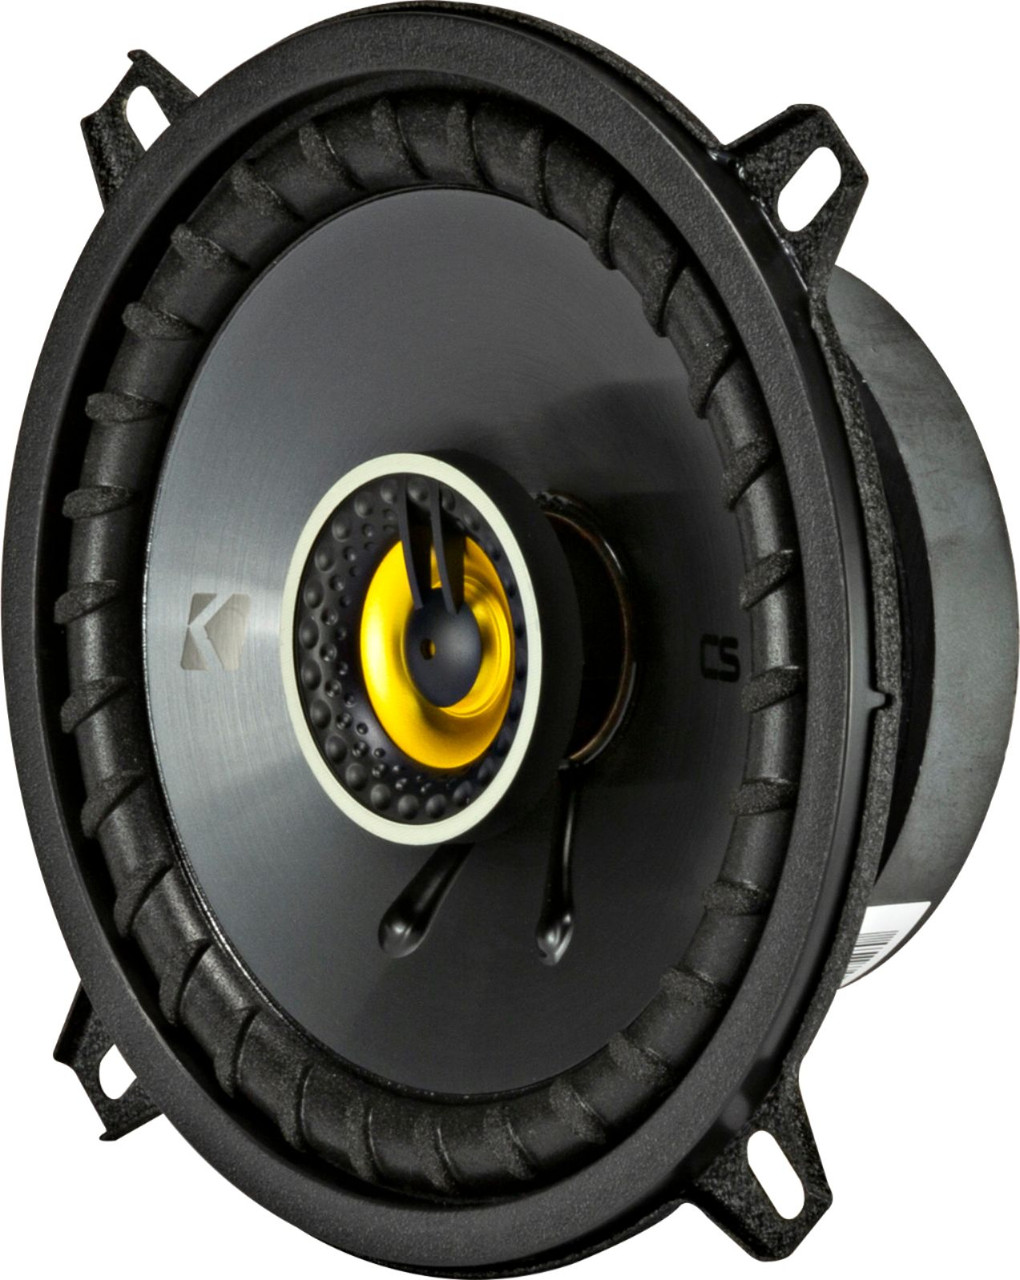 KICKER - CS Series 5-1/4" 2-Way Car Speakers with Polypropylene Cones (Pair) - Yellow/Black